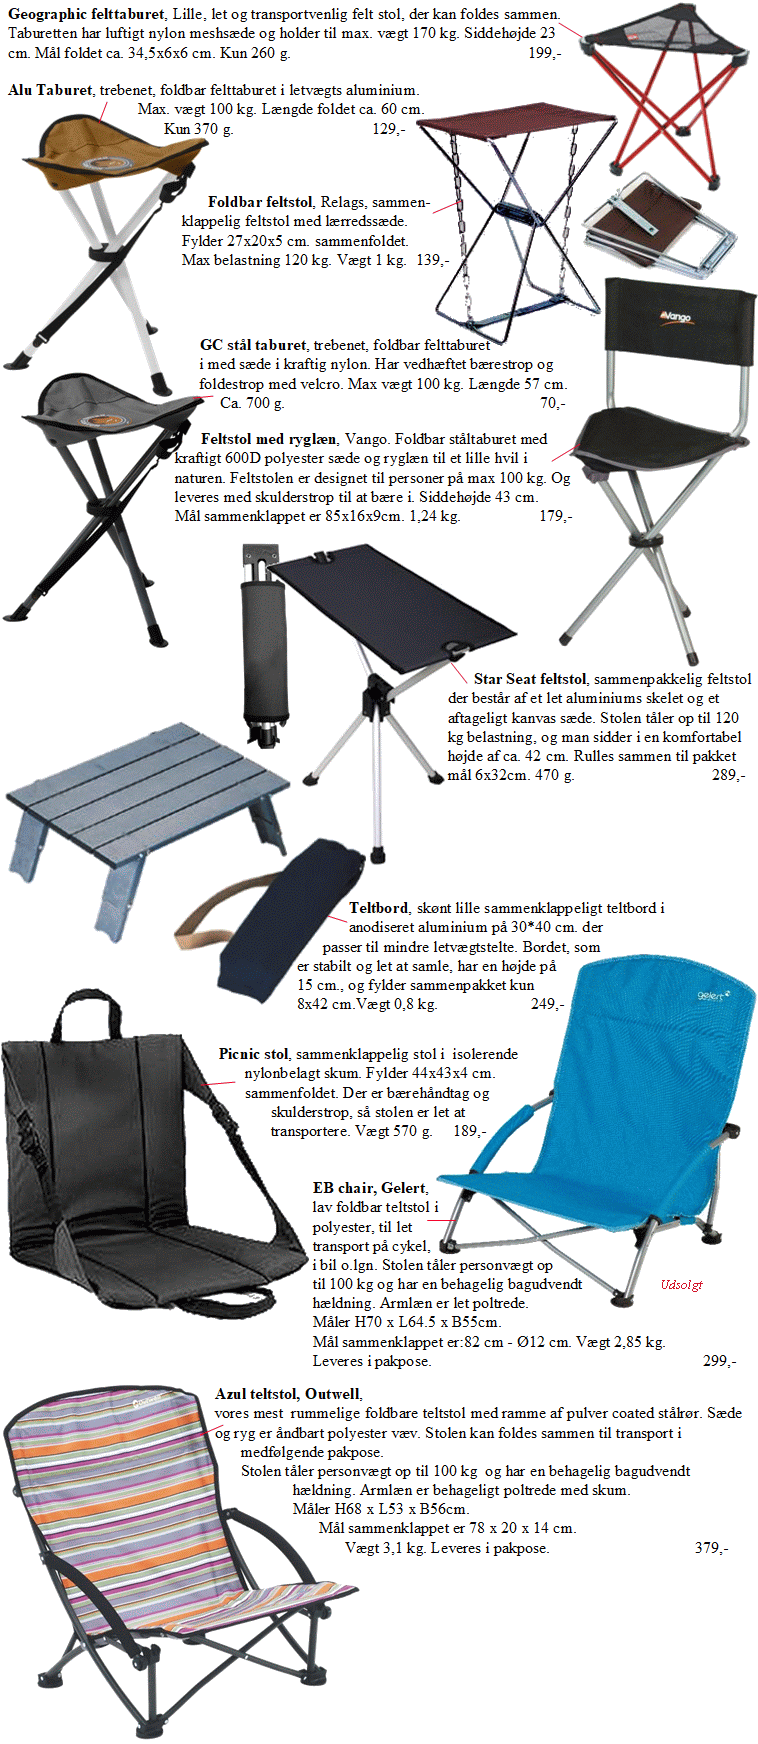 Stole, Treo feltstol, teltstol, taburet og travelchair